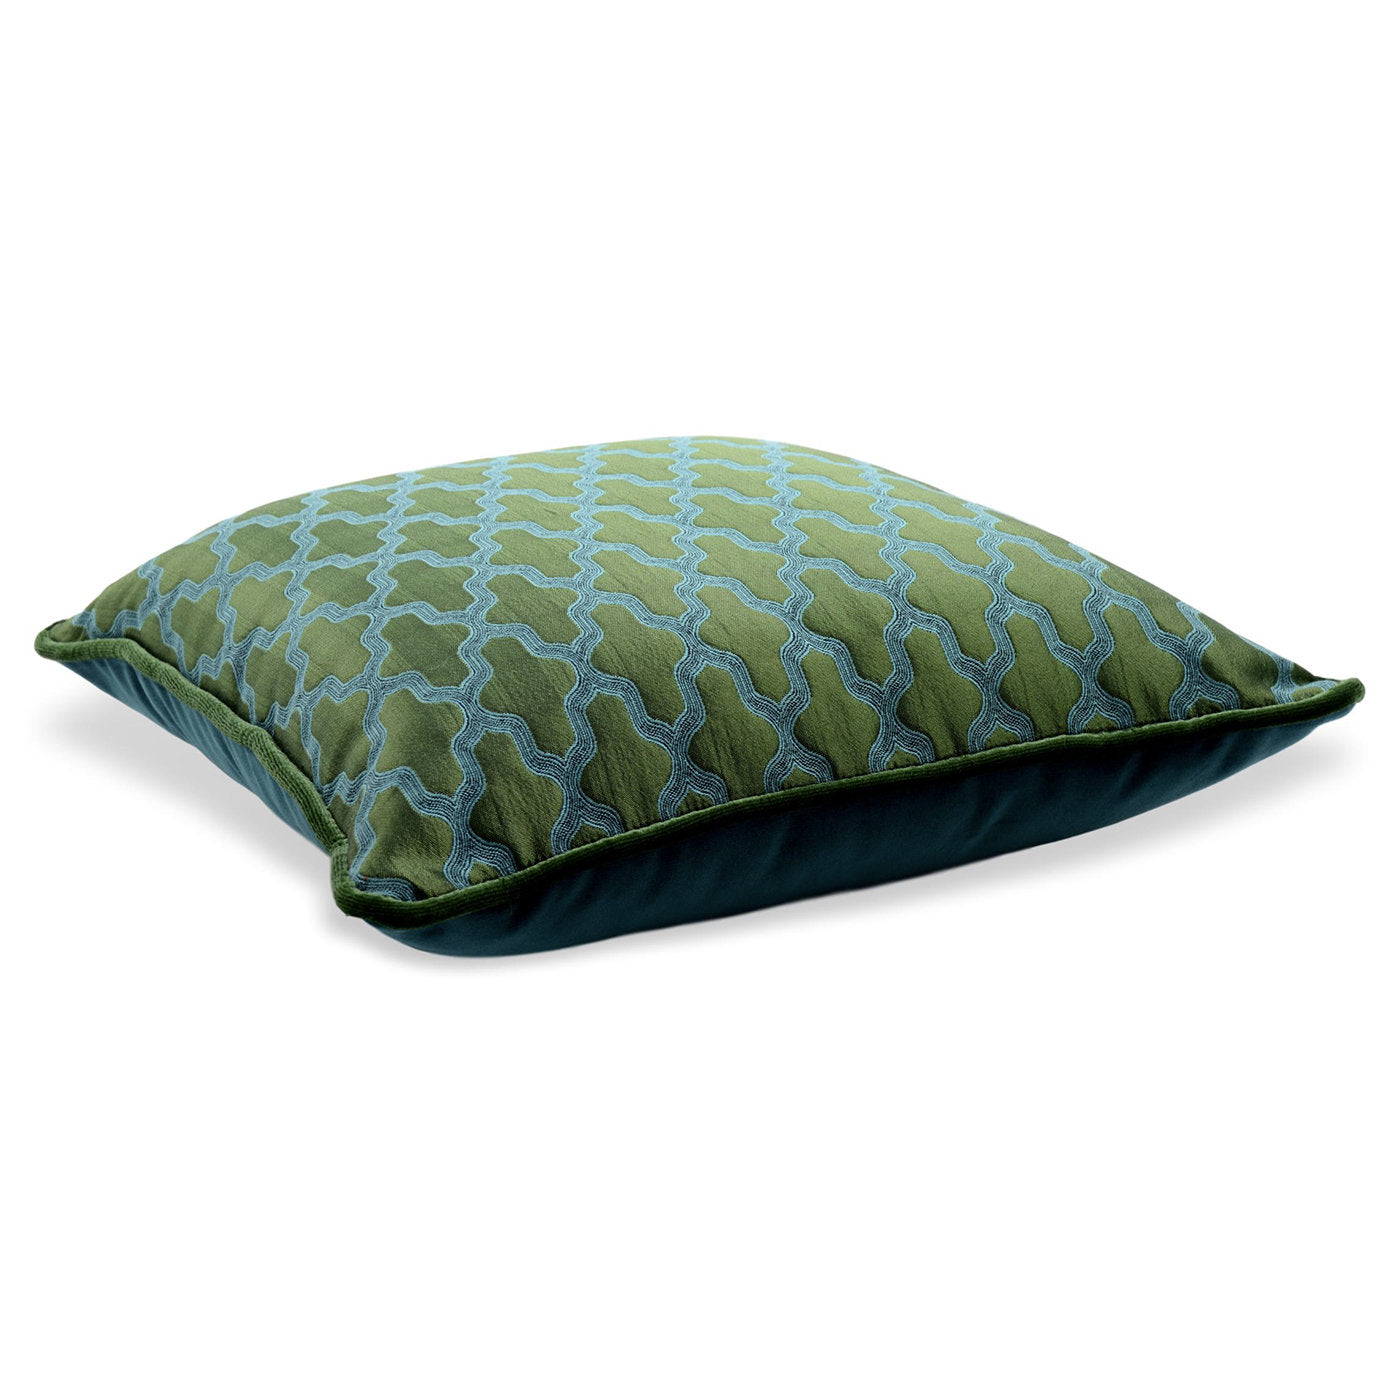 Emerald Carré Cushion in jacquard fabric - Alternative view 2